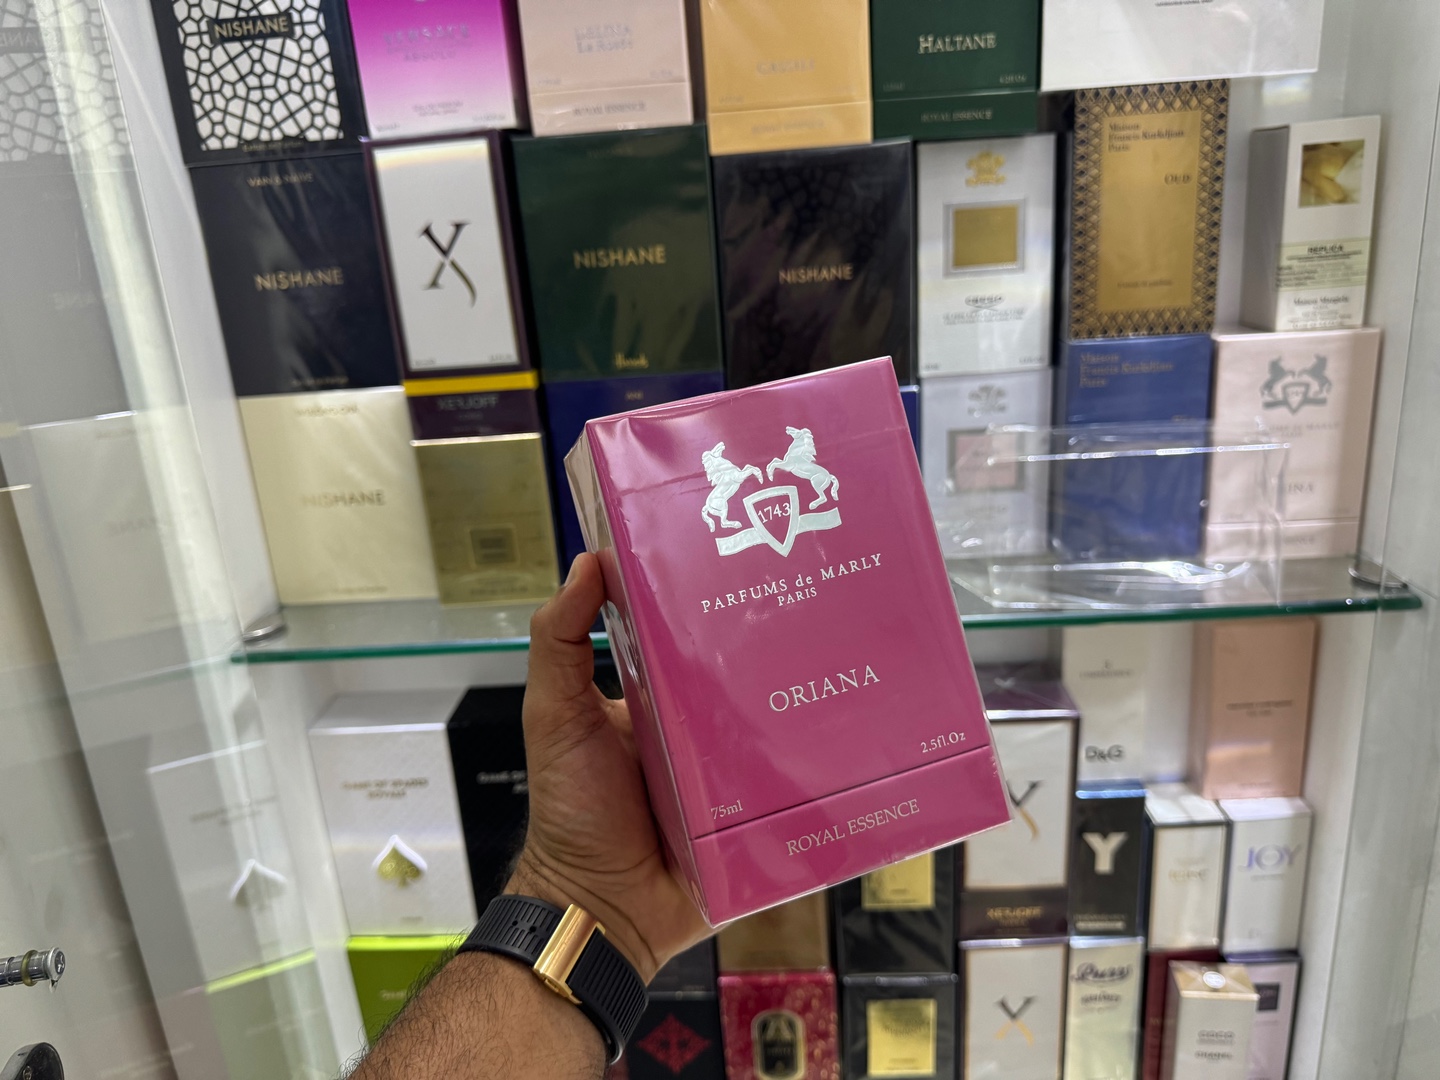 joyas, relojes y accesorios - Perfume Parfums de Marly ORIANA Royal Essence 75ml Nuevo, Original $ 15,500 NEG 1